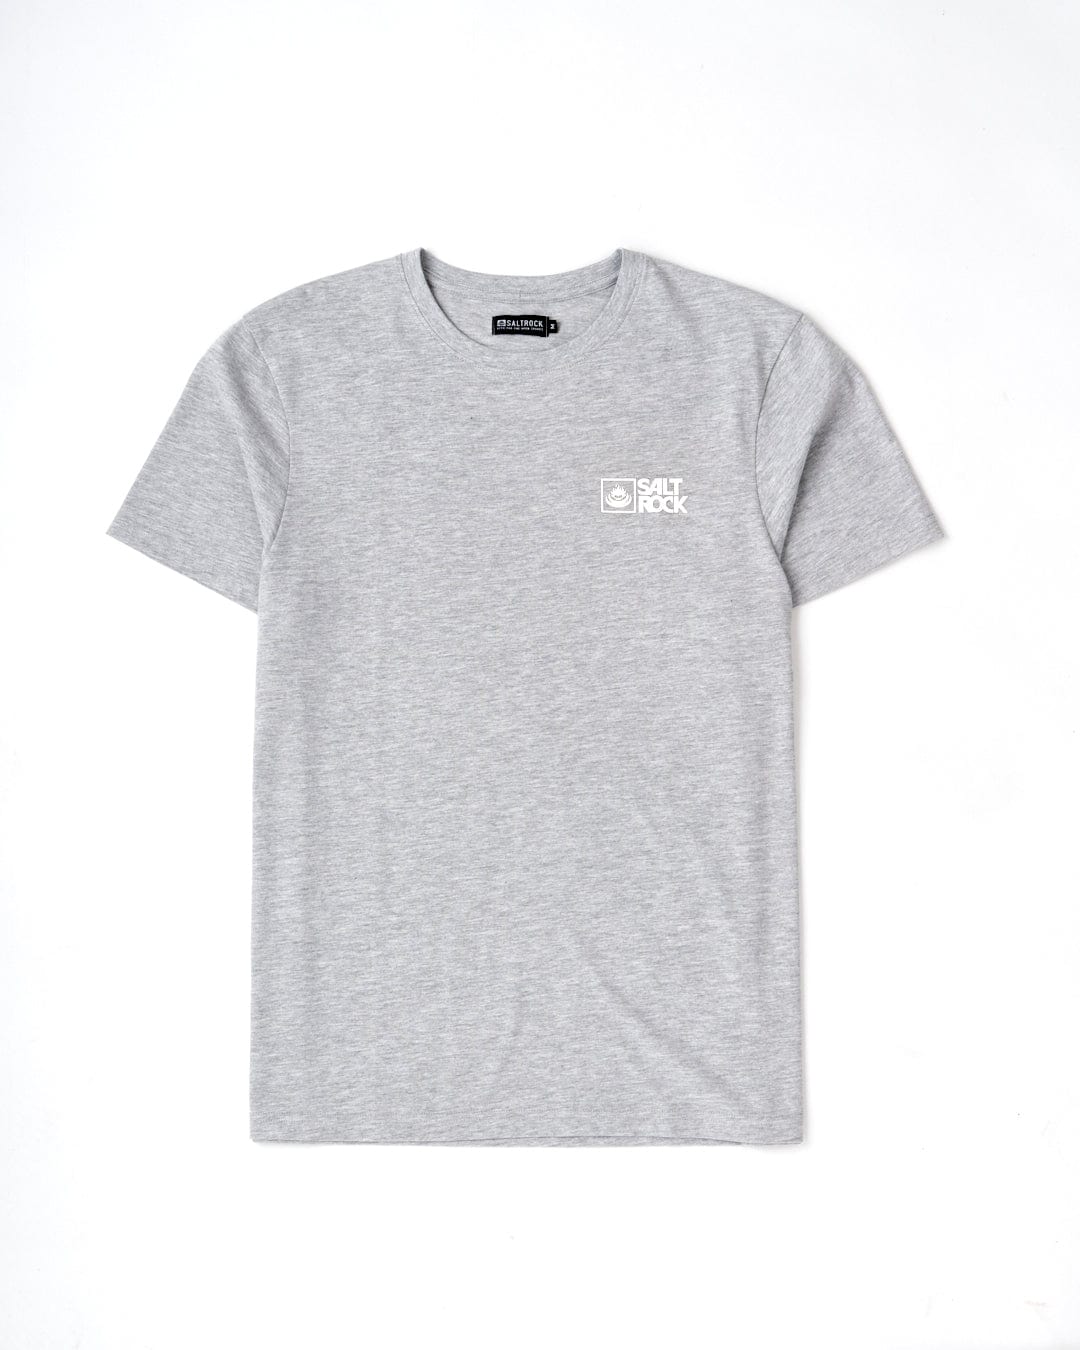 Saltrock Original - Mens Short Sleeve T-Shirt - Grey, Grey / XL